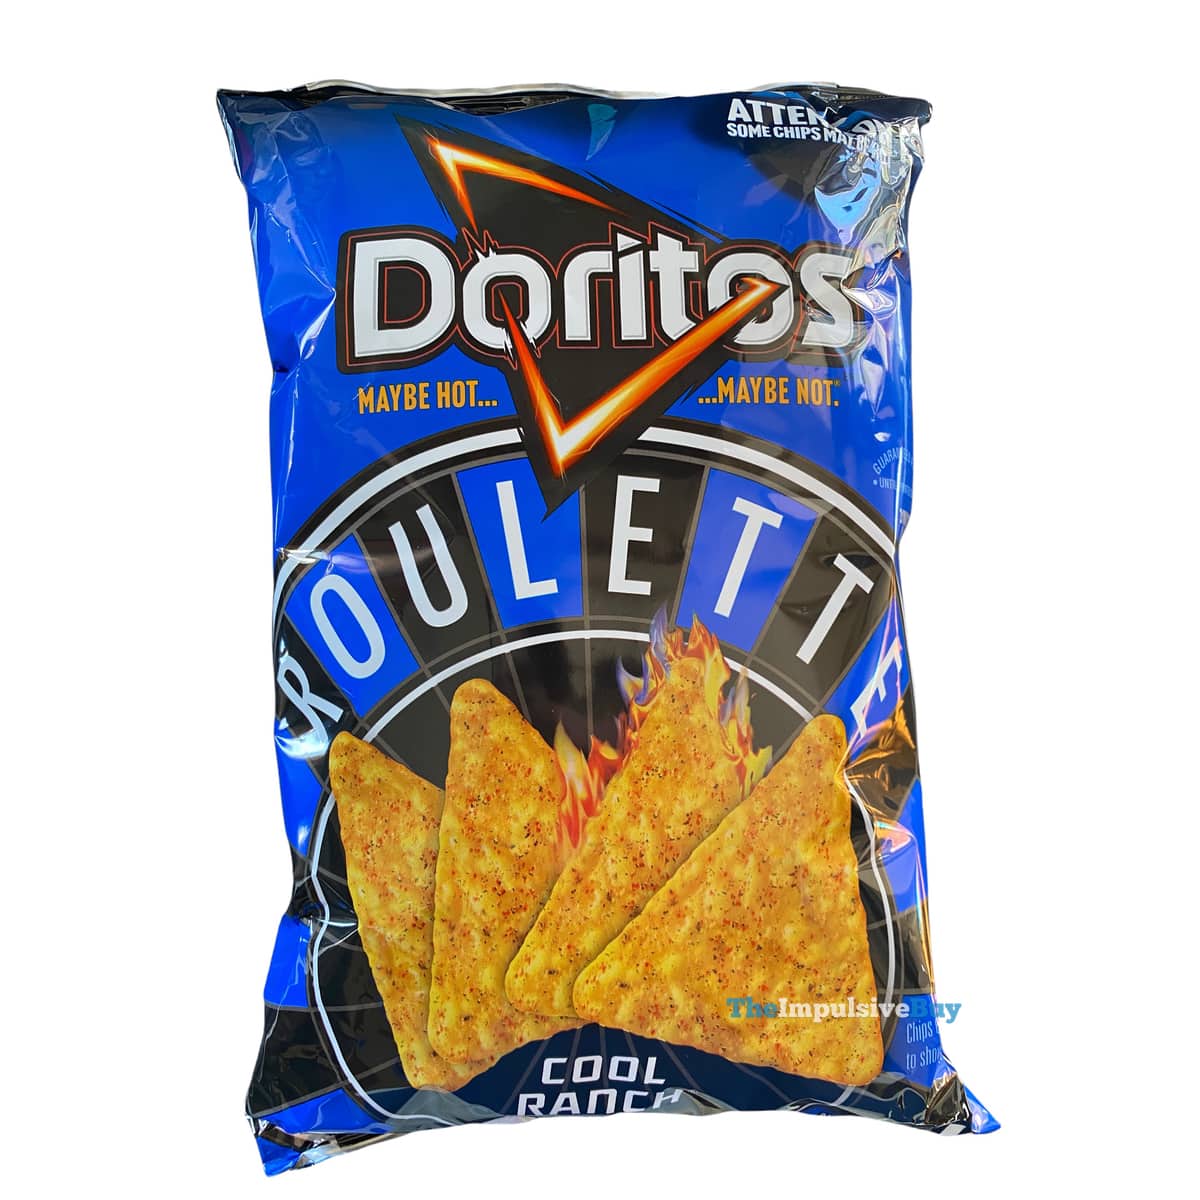 Doritos Roulette Cool Ranch Flavored Tortilla Chips, 9 oz Bag 